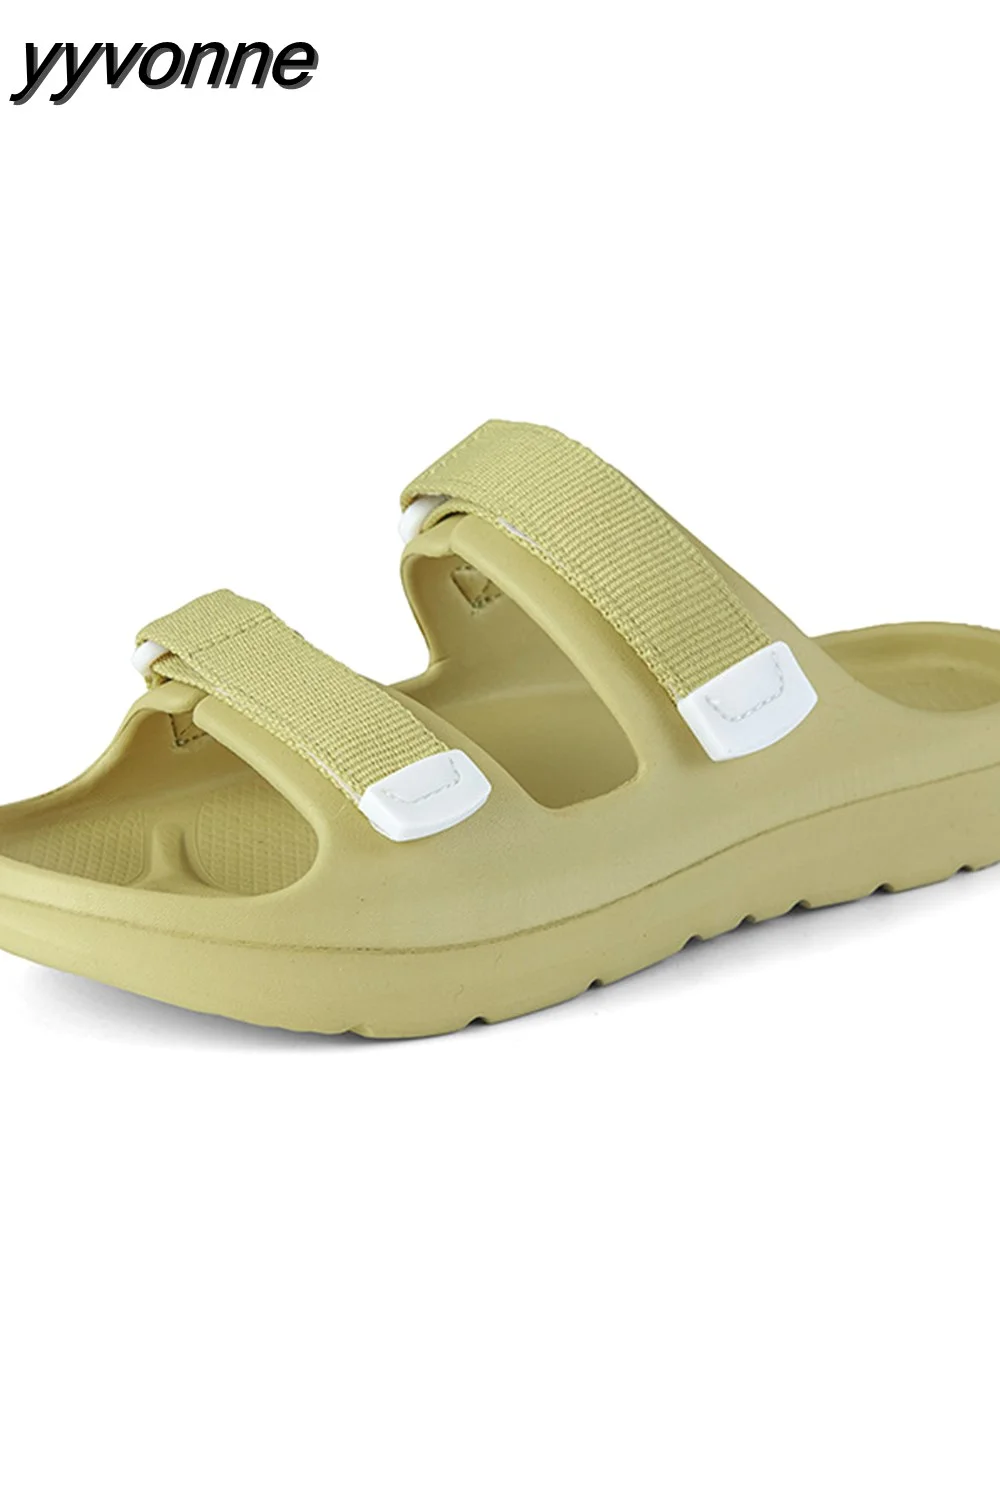 yyvonne Summer Fashion Men Light EVA Outside Slippers Casual Solid Color Waterproof Non-slip Indoor Home Slides Shoe